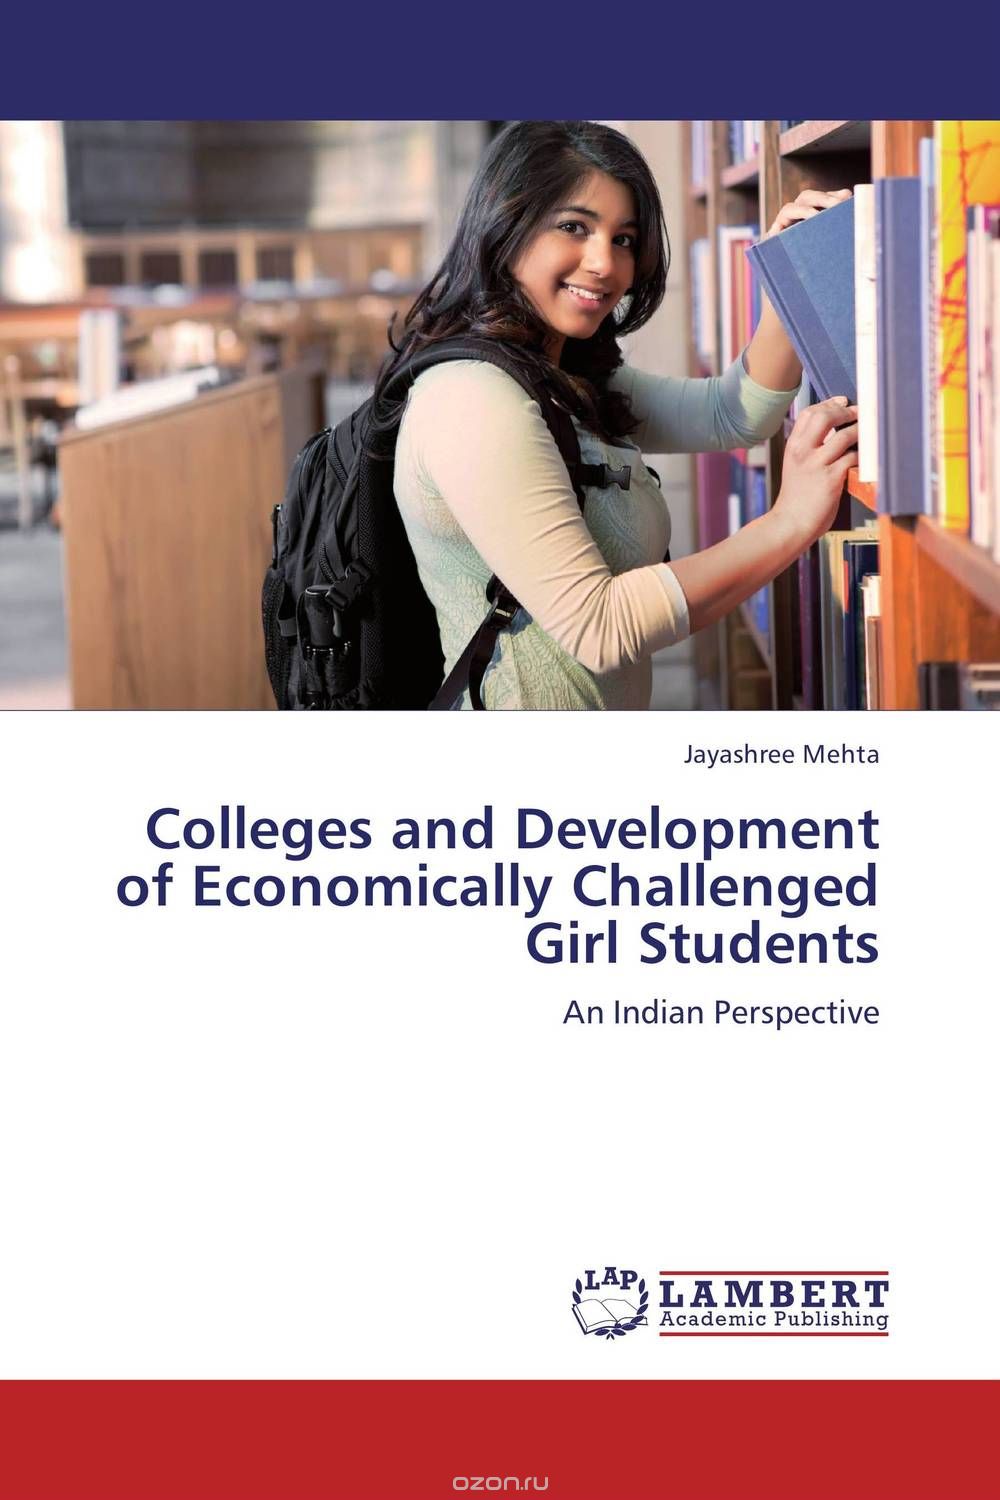 Скачать книгу "Colleges and Development of Economically Challenged Girl Students"